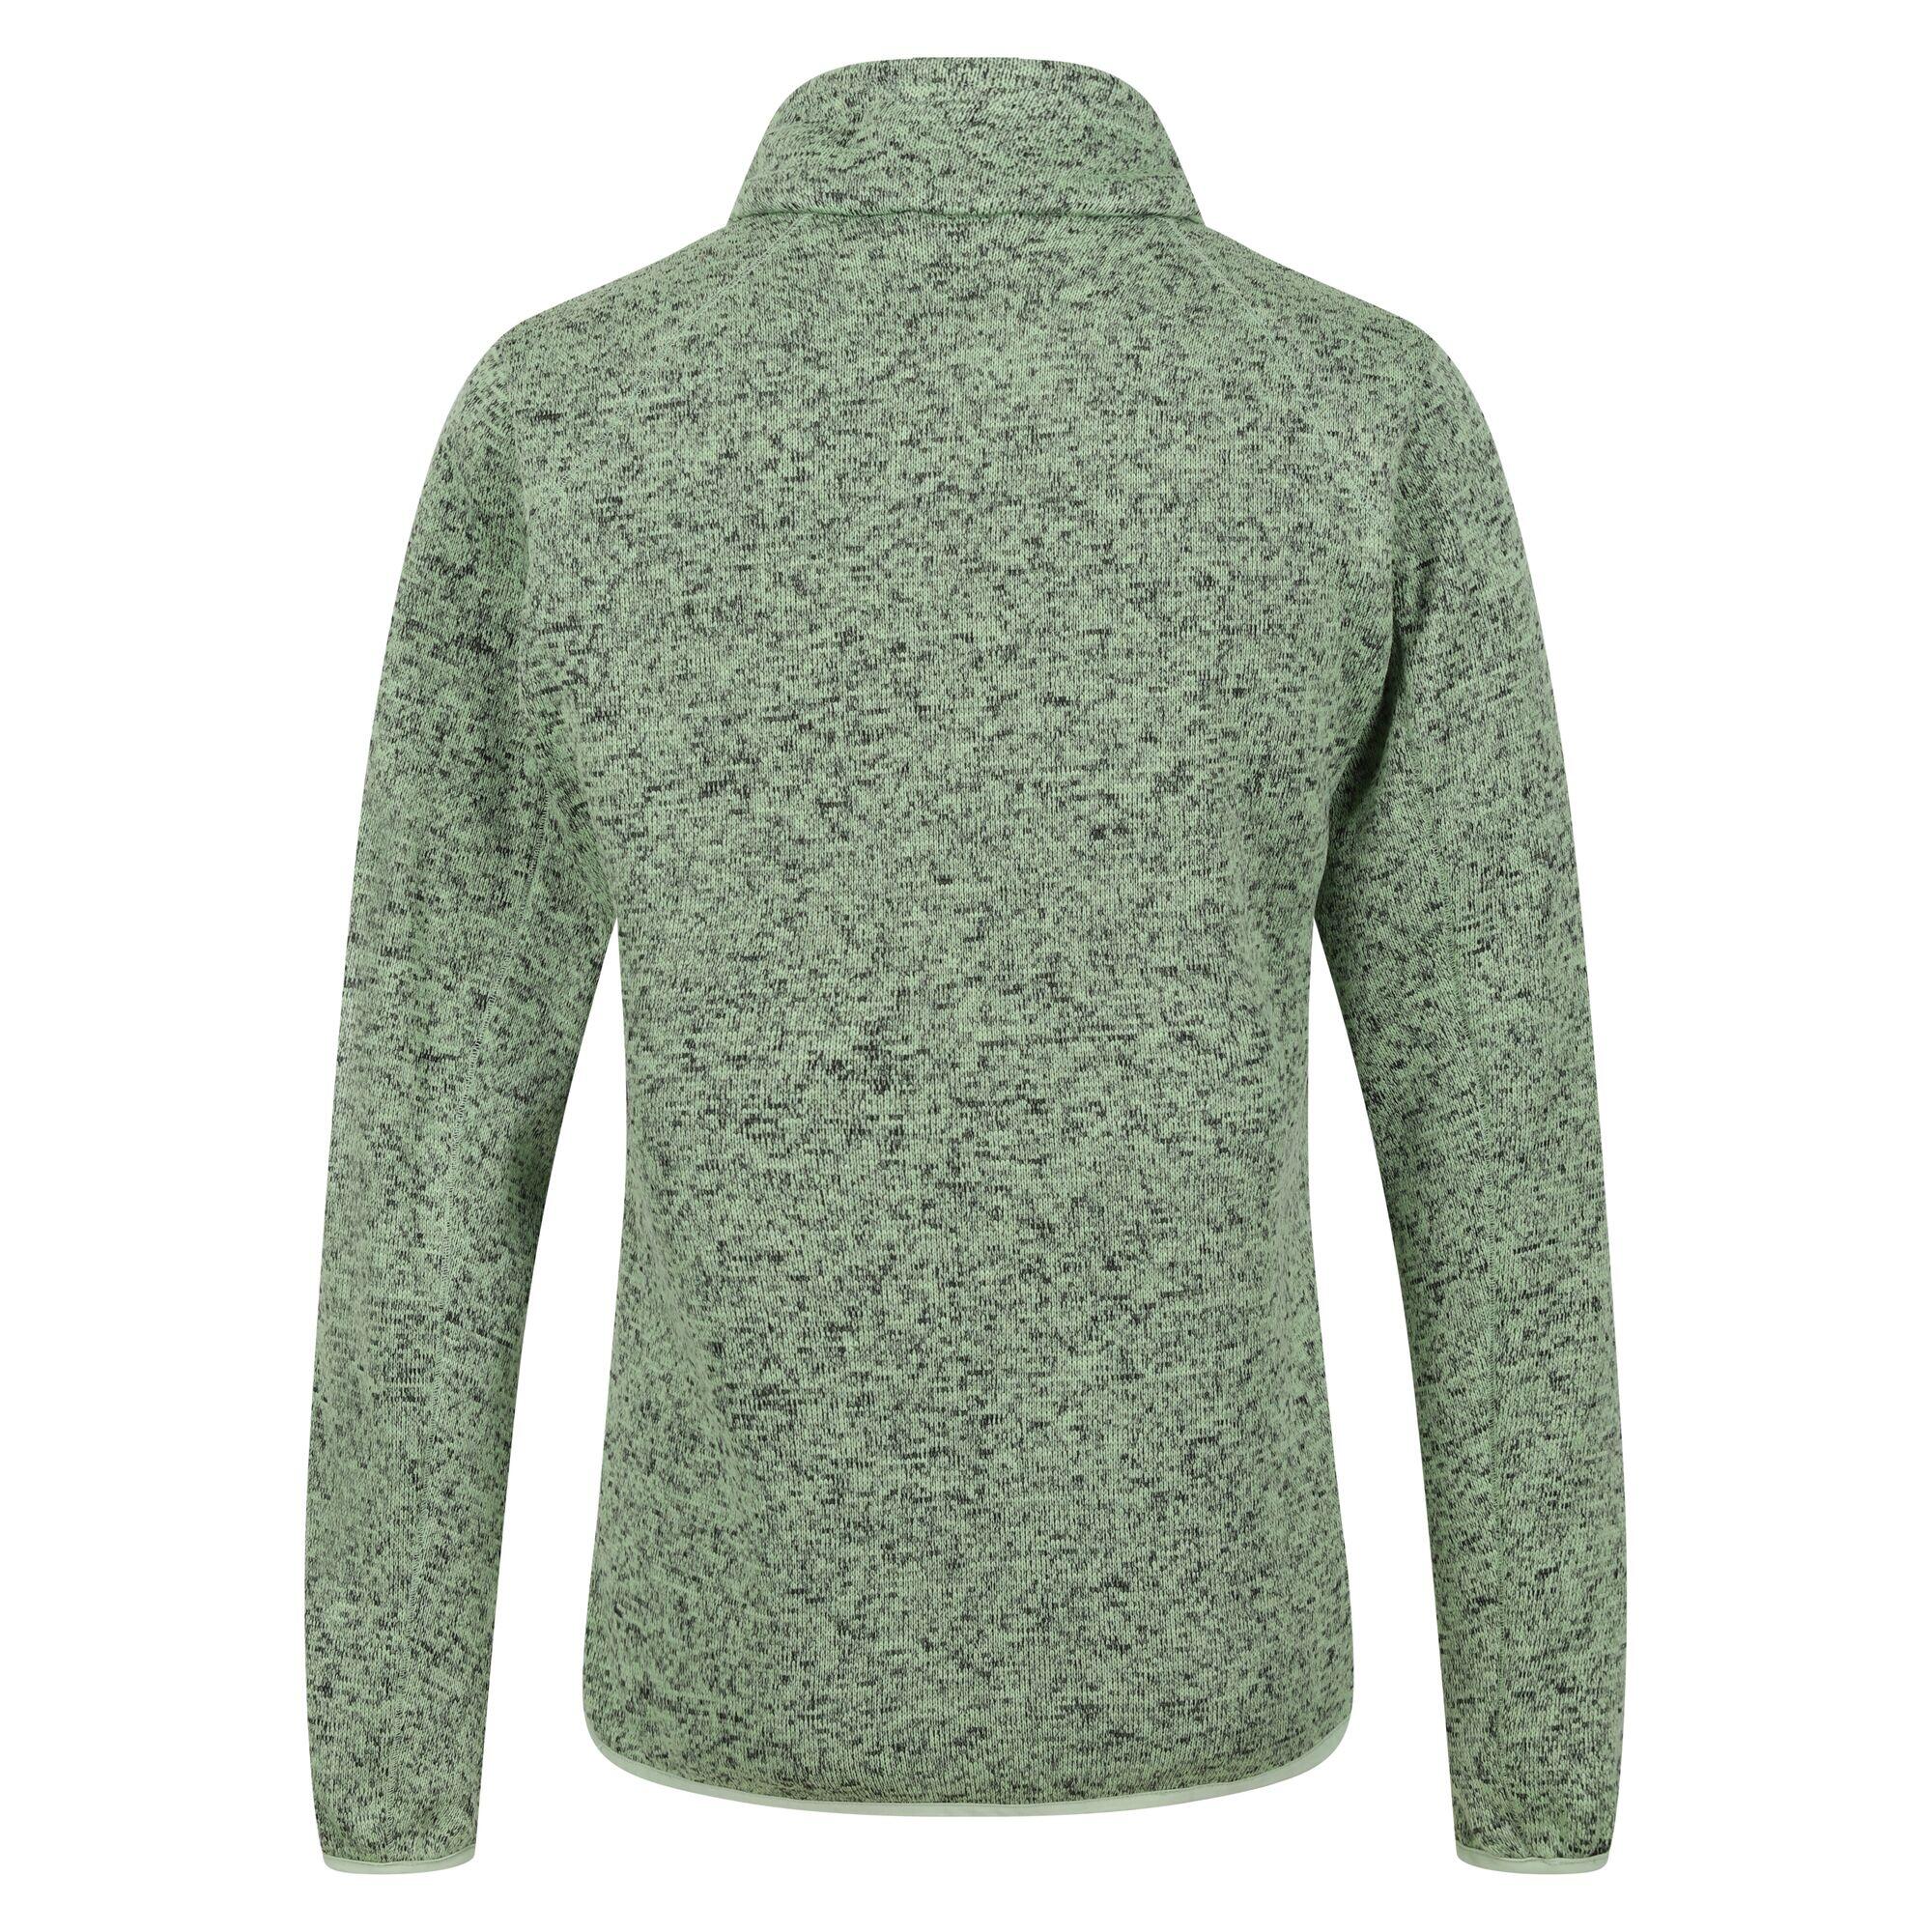 Womens/Ladies Newhill Marl Full Zip Fleece Jacket (Green) 2/5